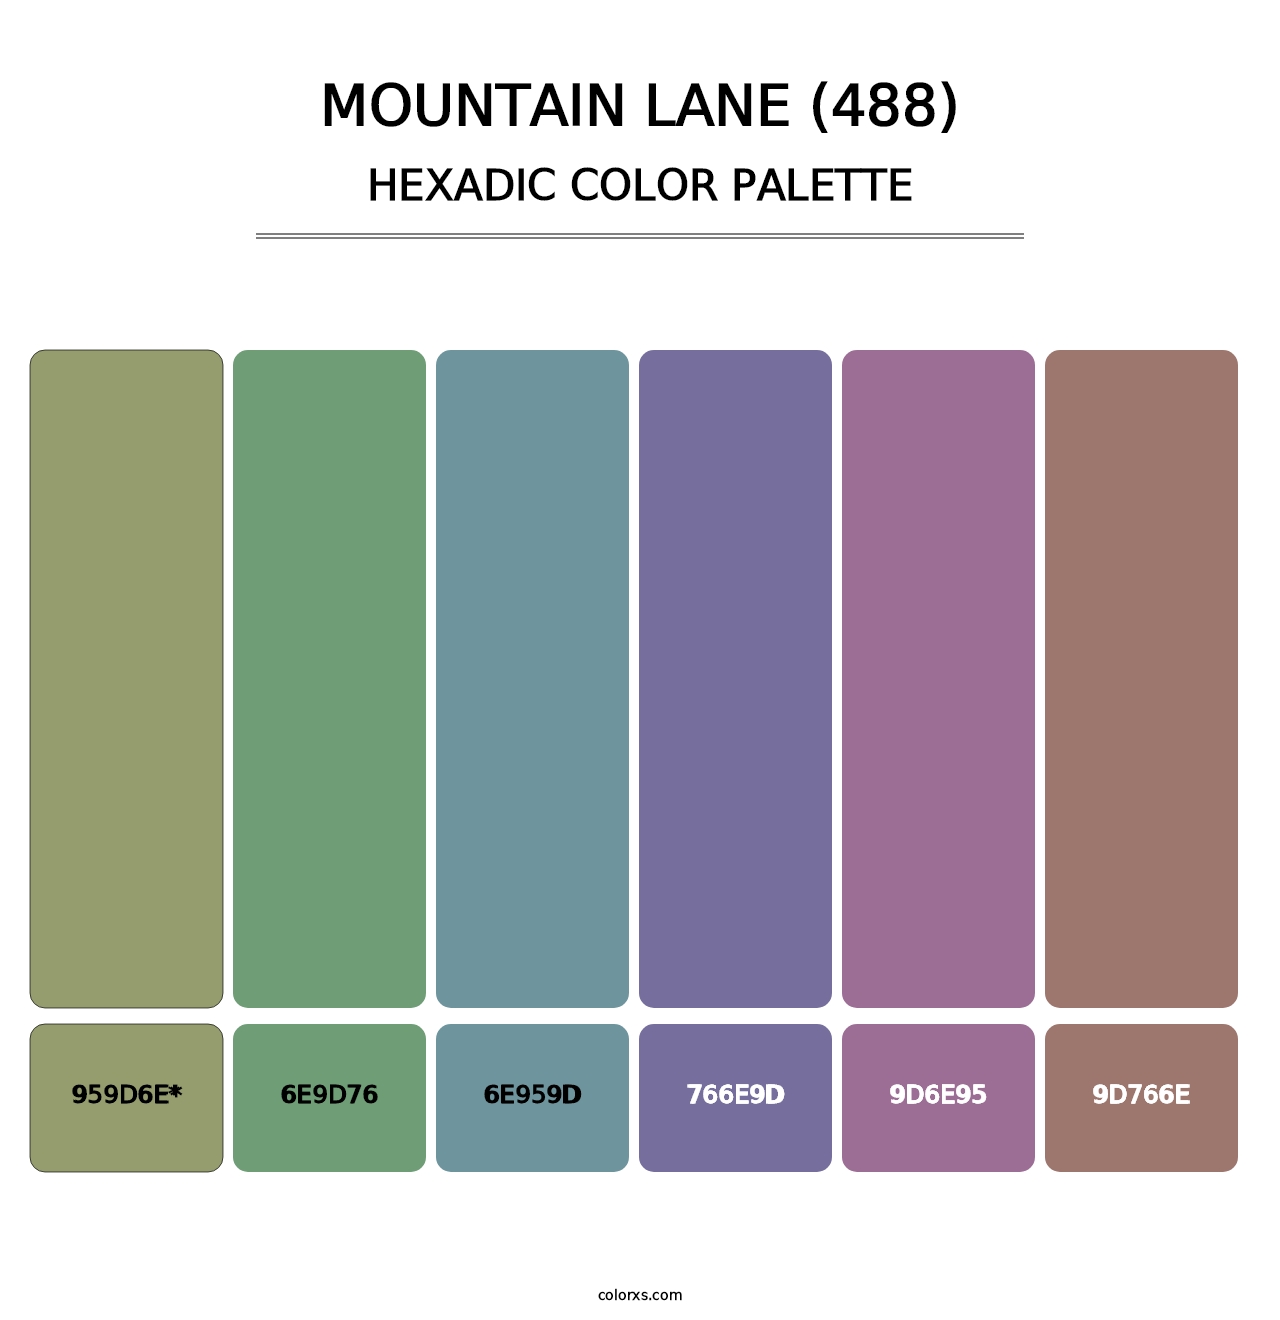 Mountain Lane (488) - Hexadic Color Palette